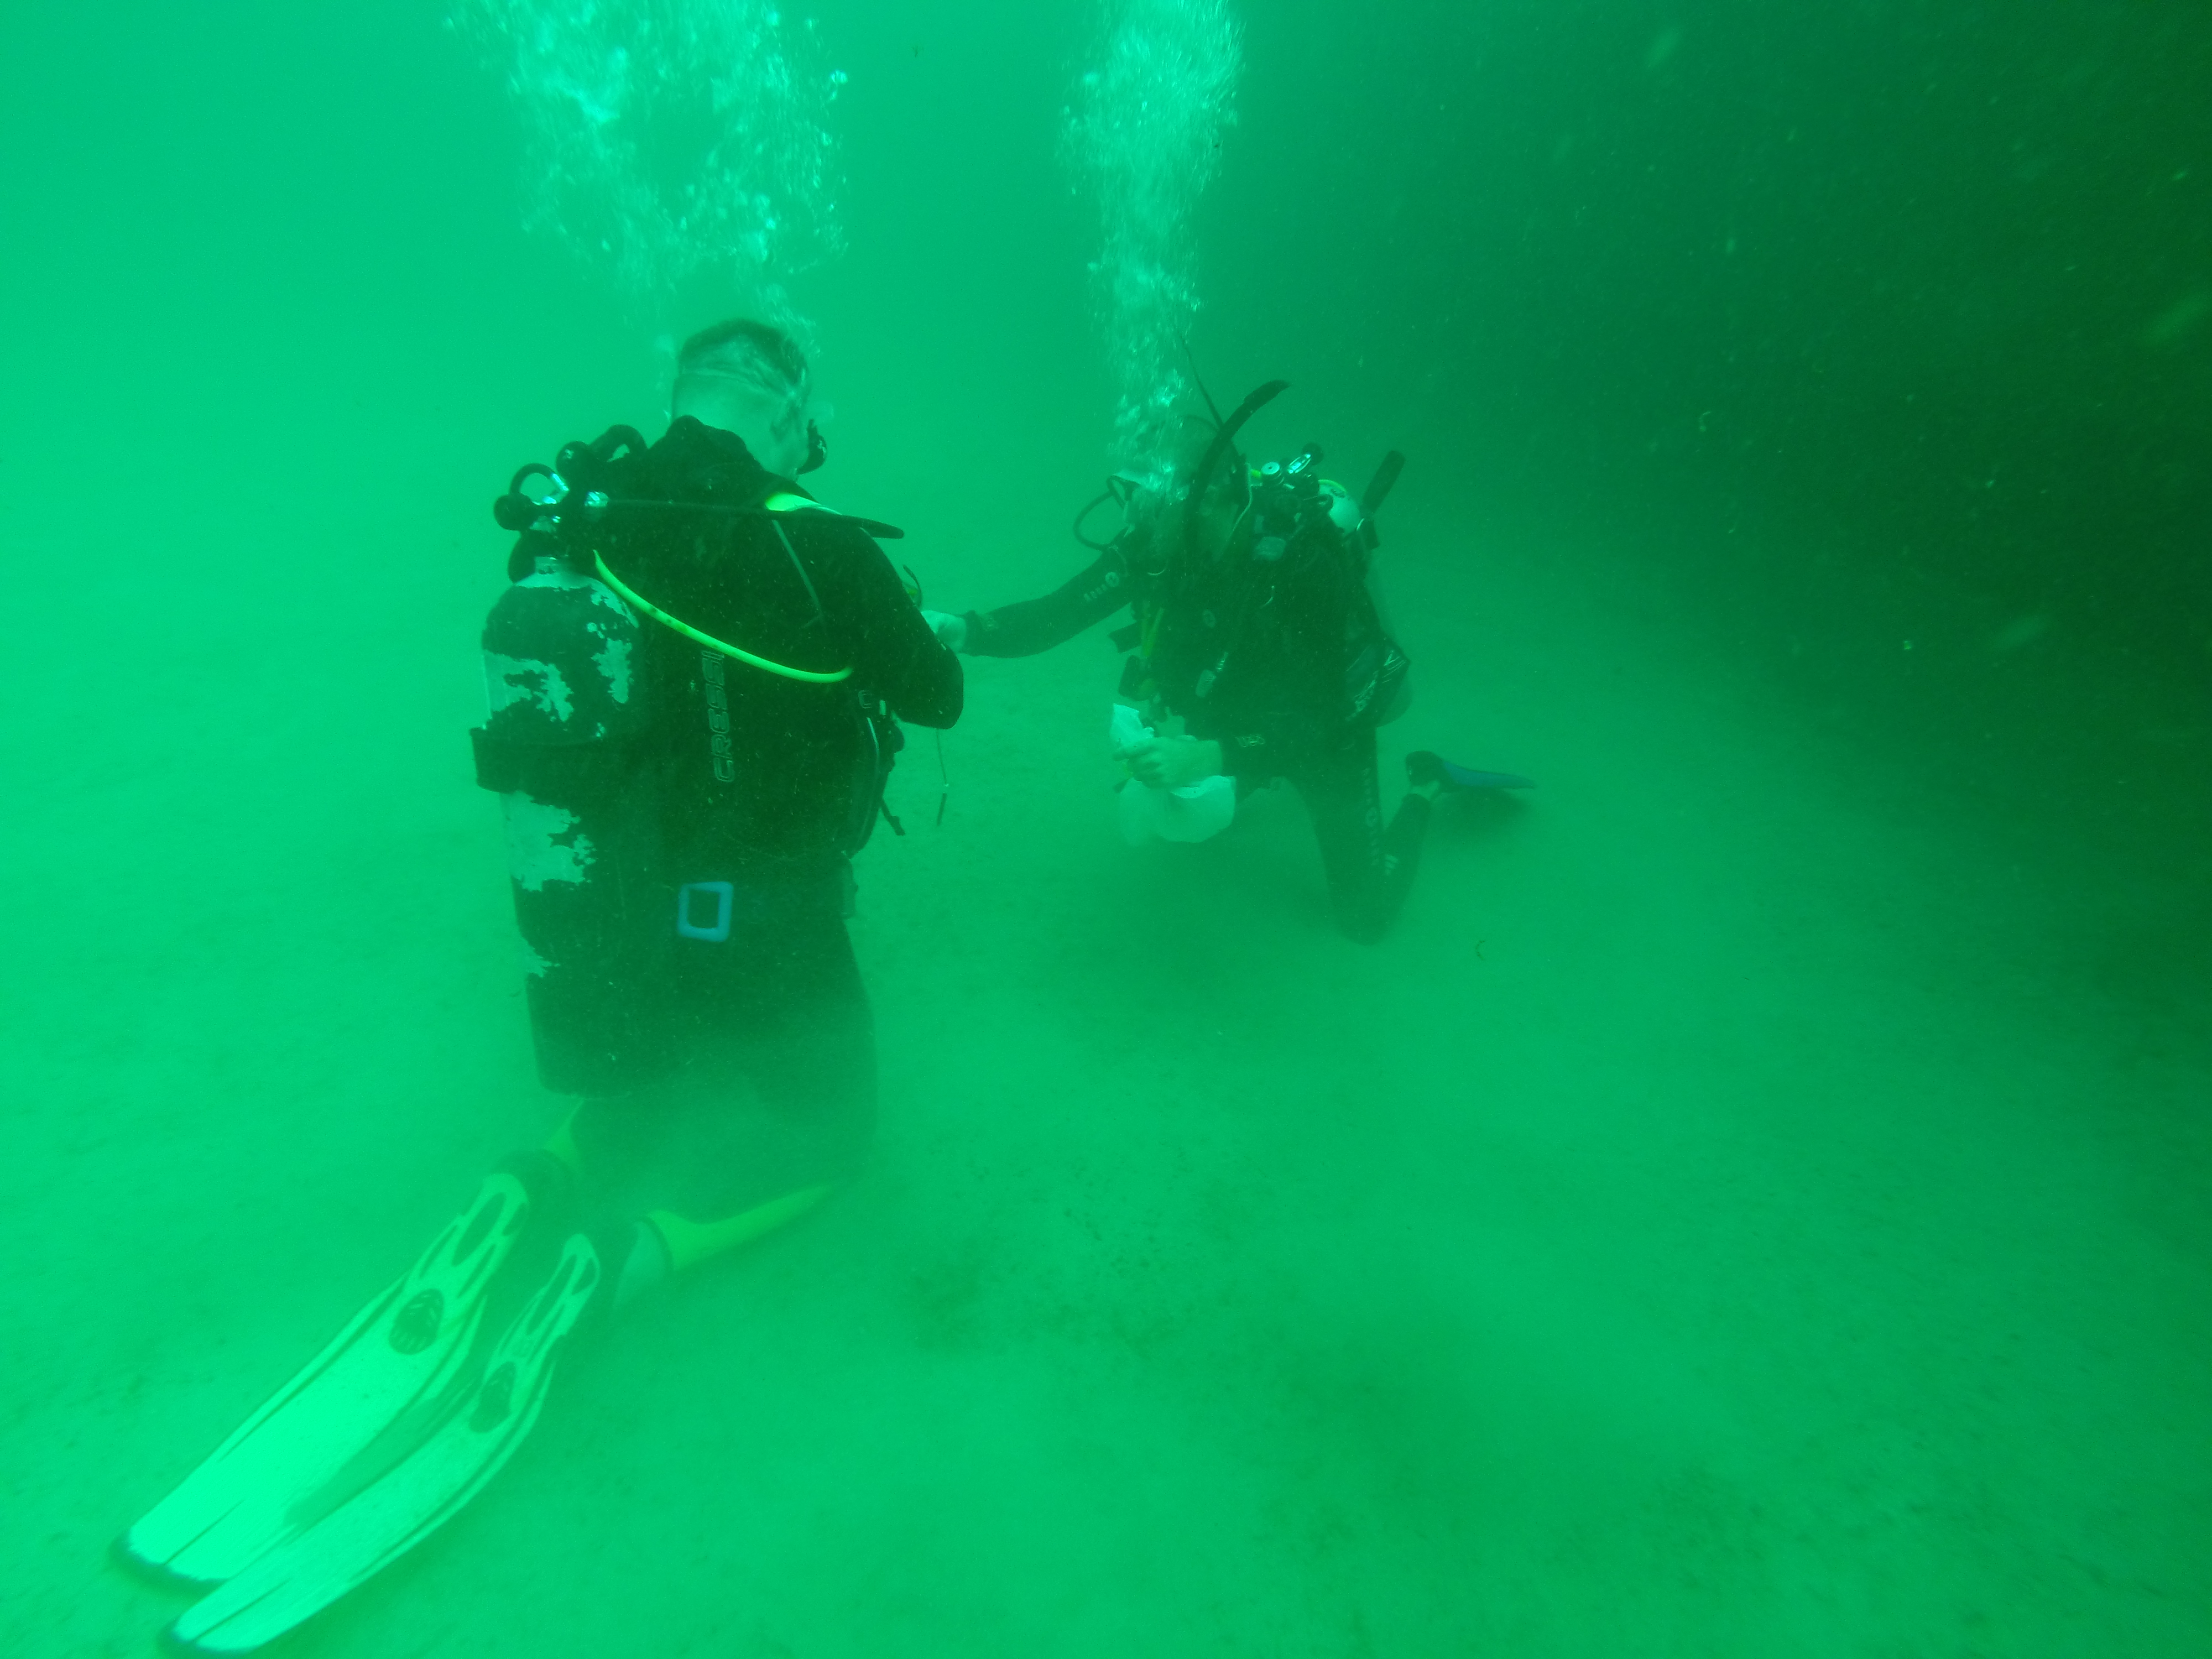 A colleague diver doing deep skills